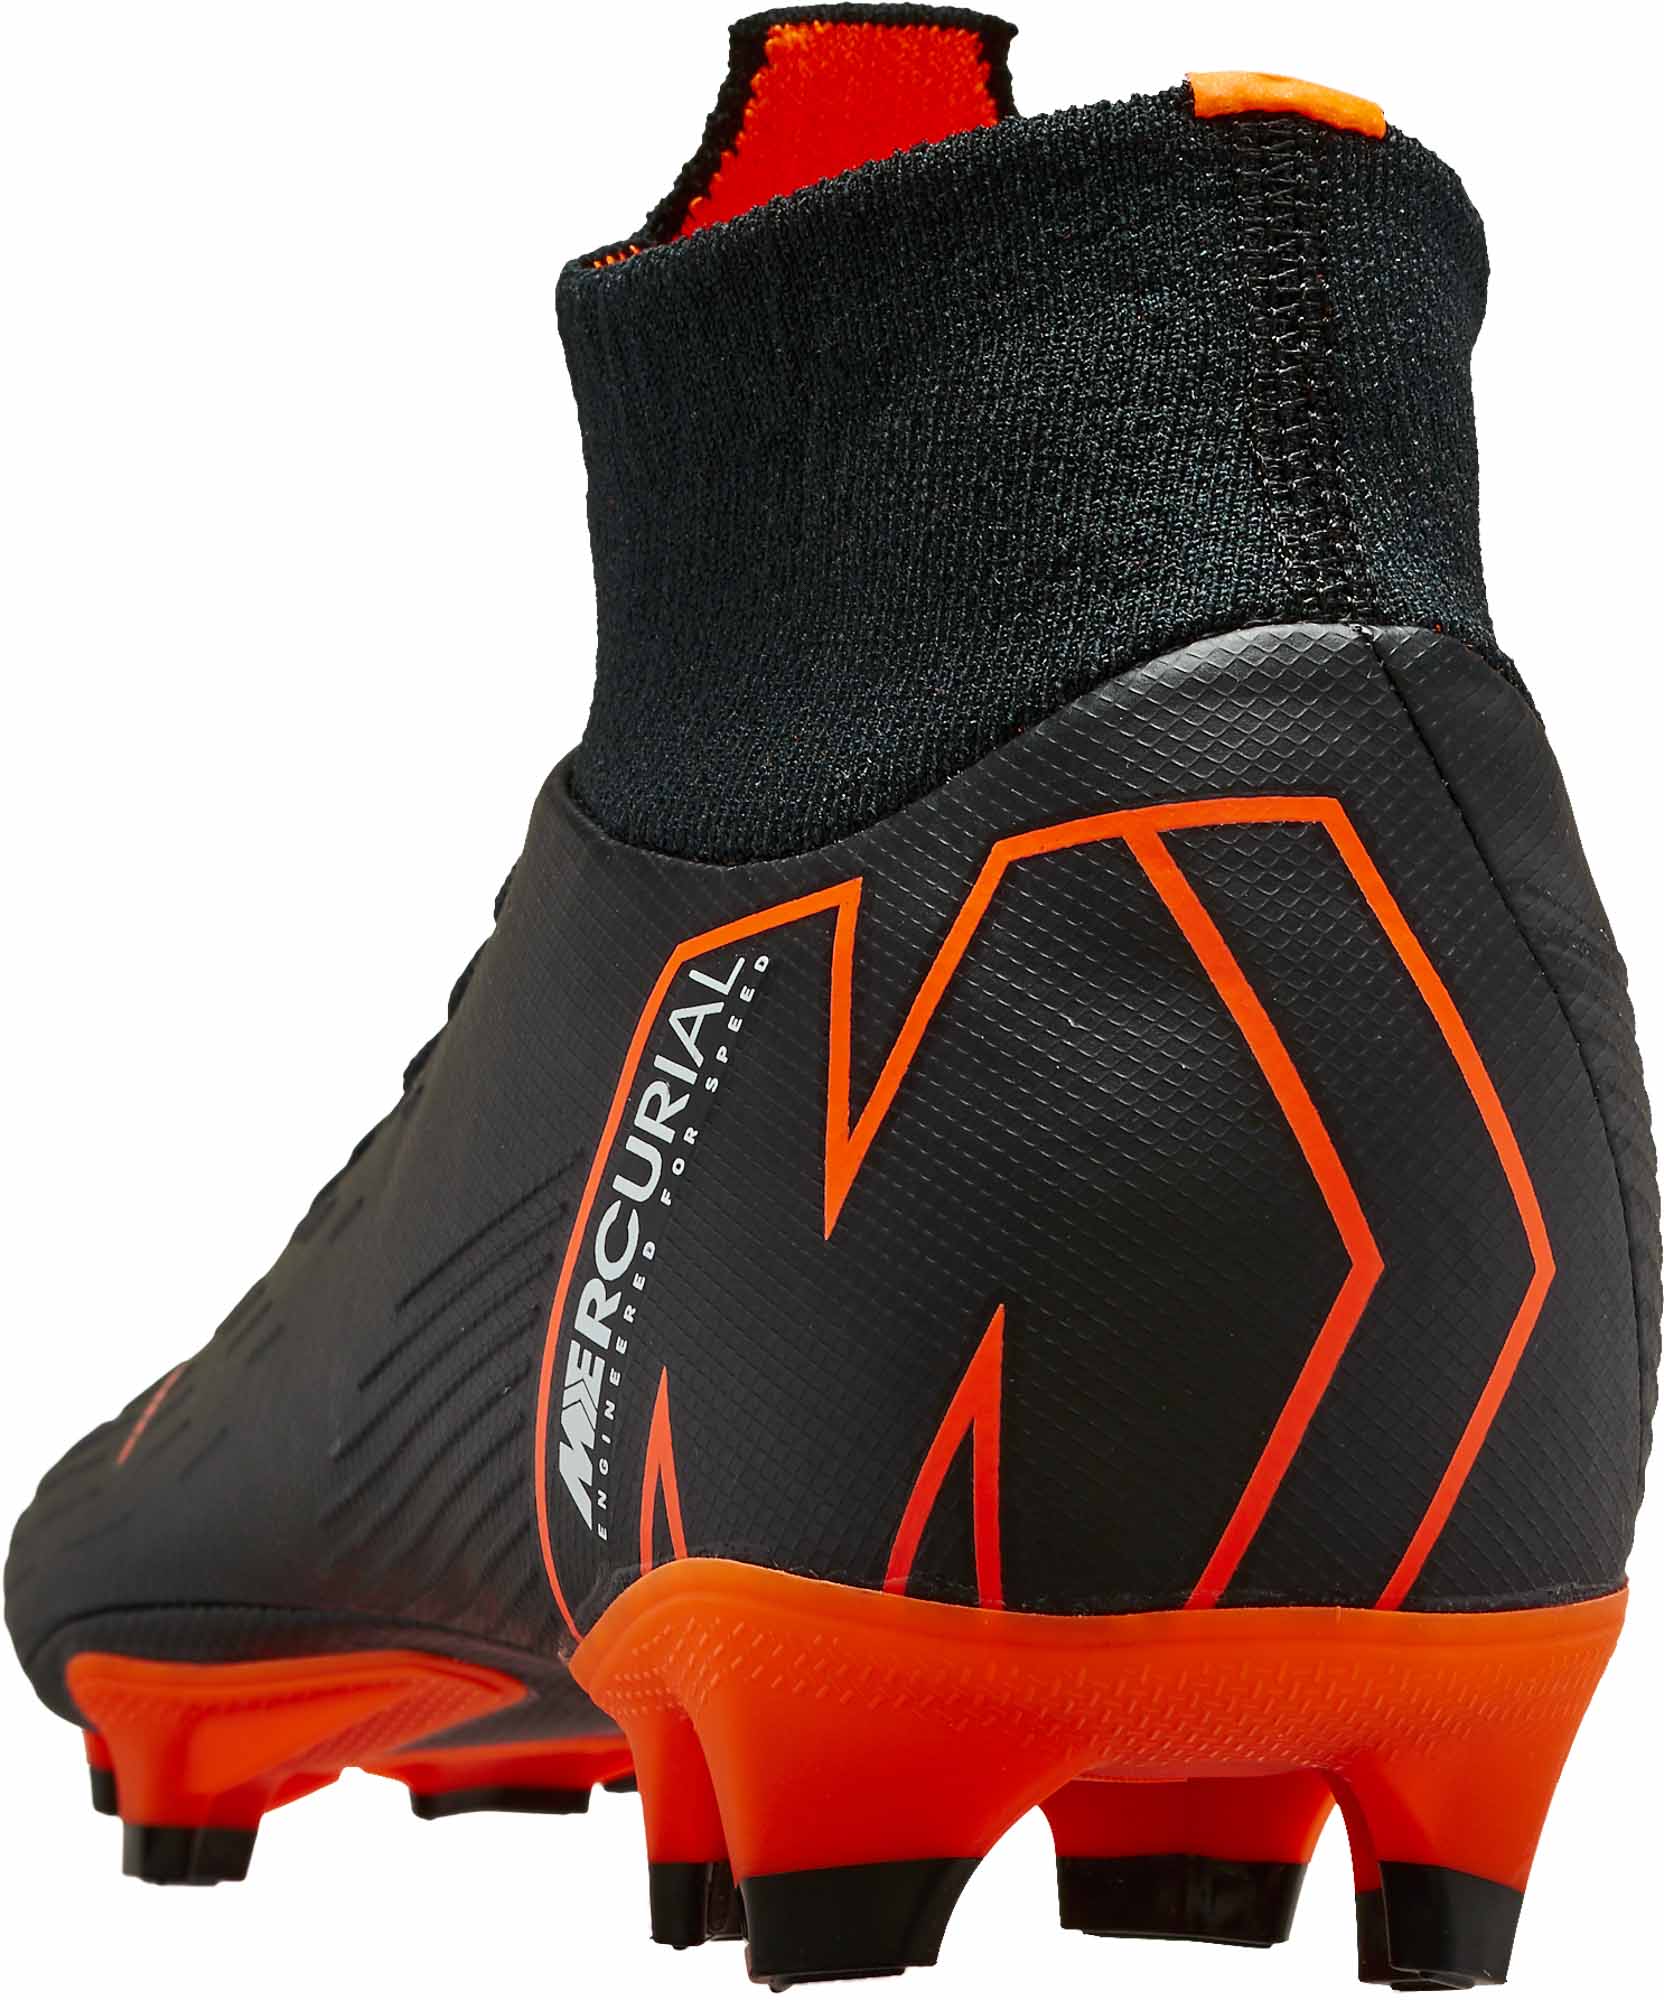 NIKE SUPERFLY 6 Pro FG Soccer Cleats Total Orange Black.